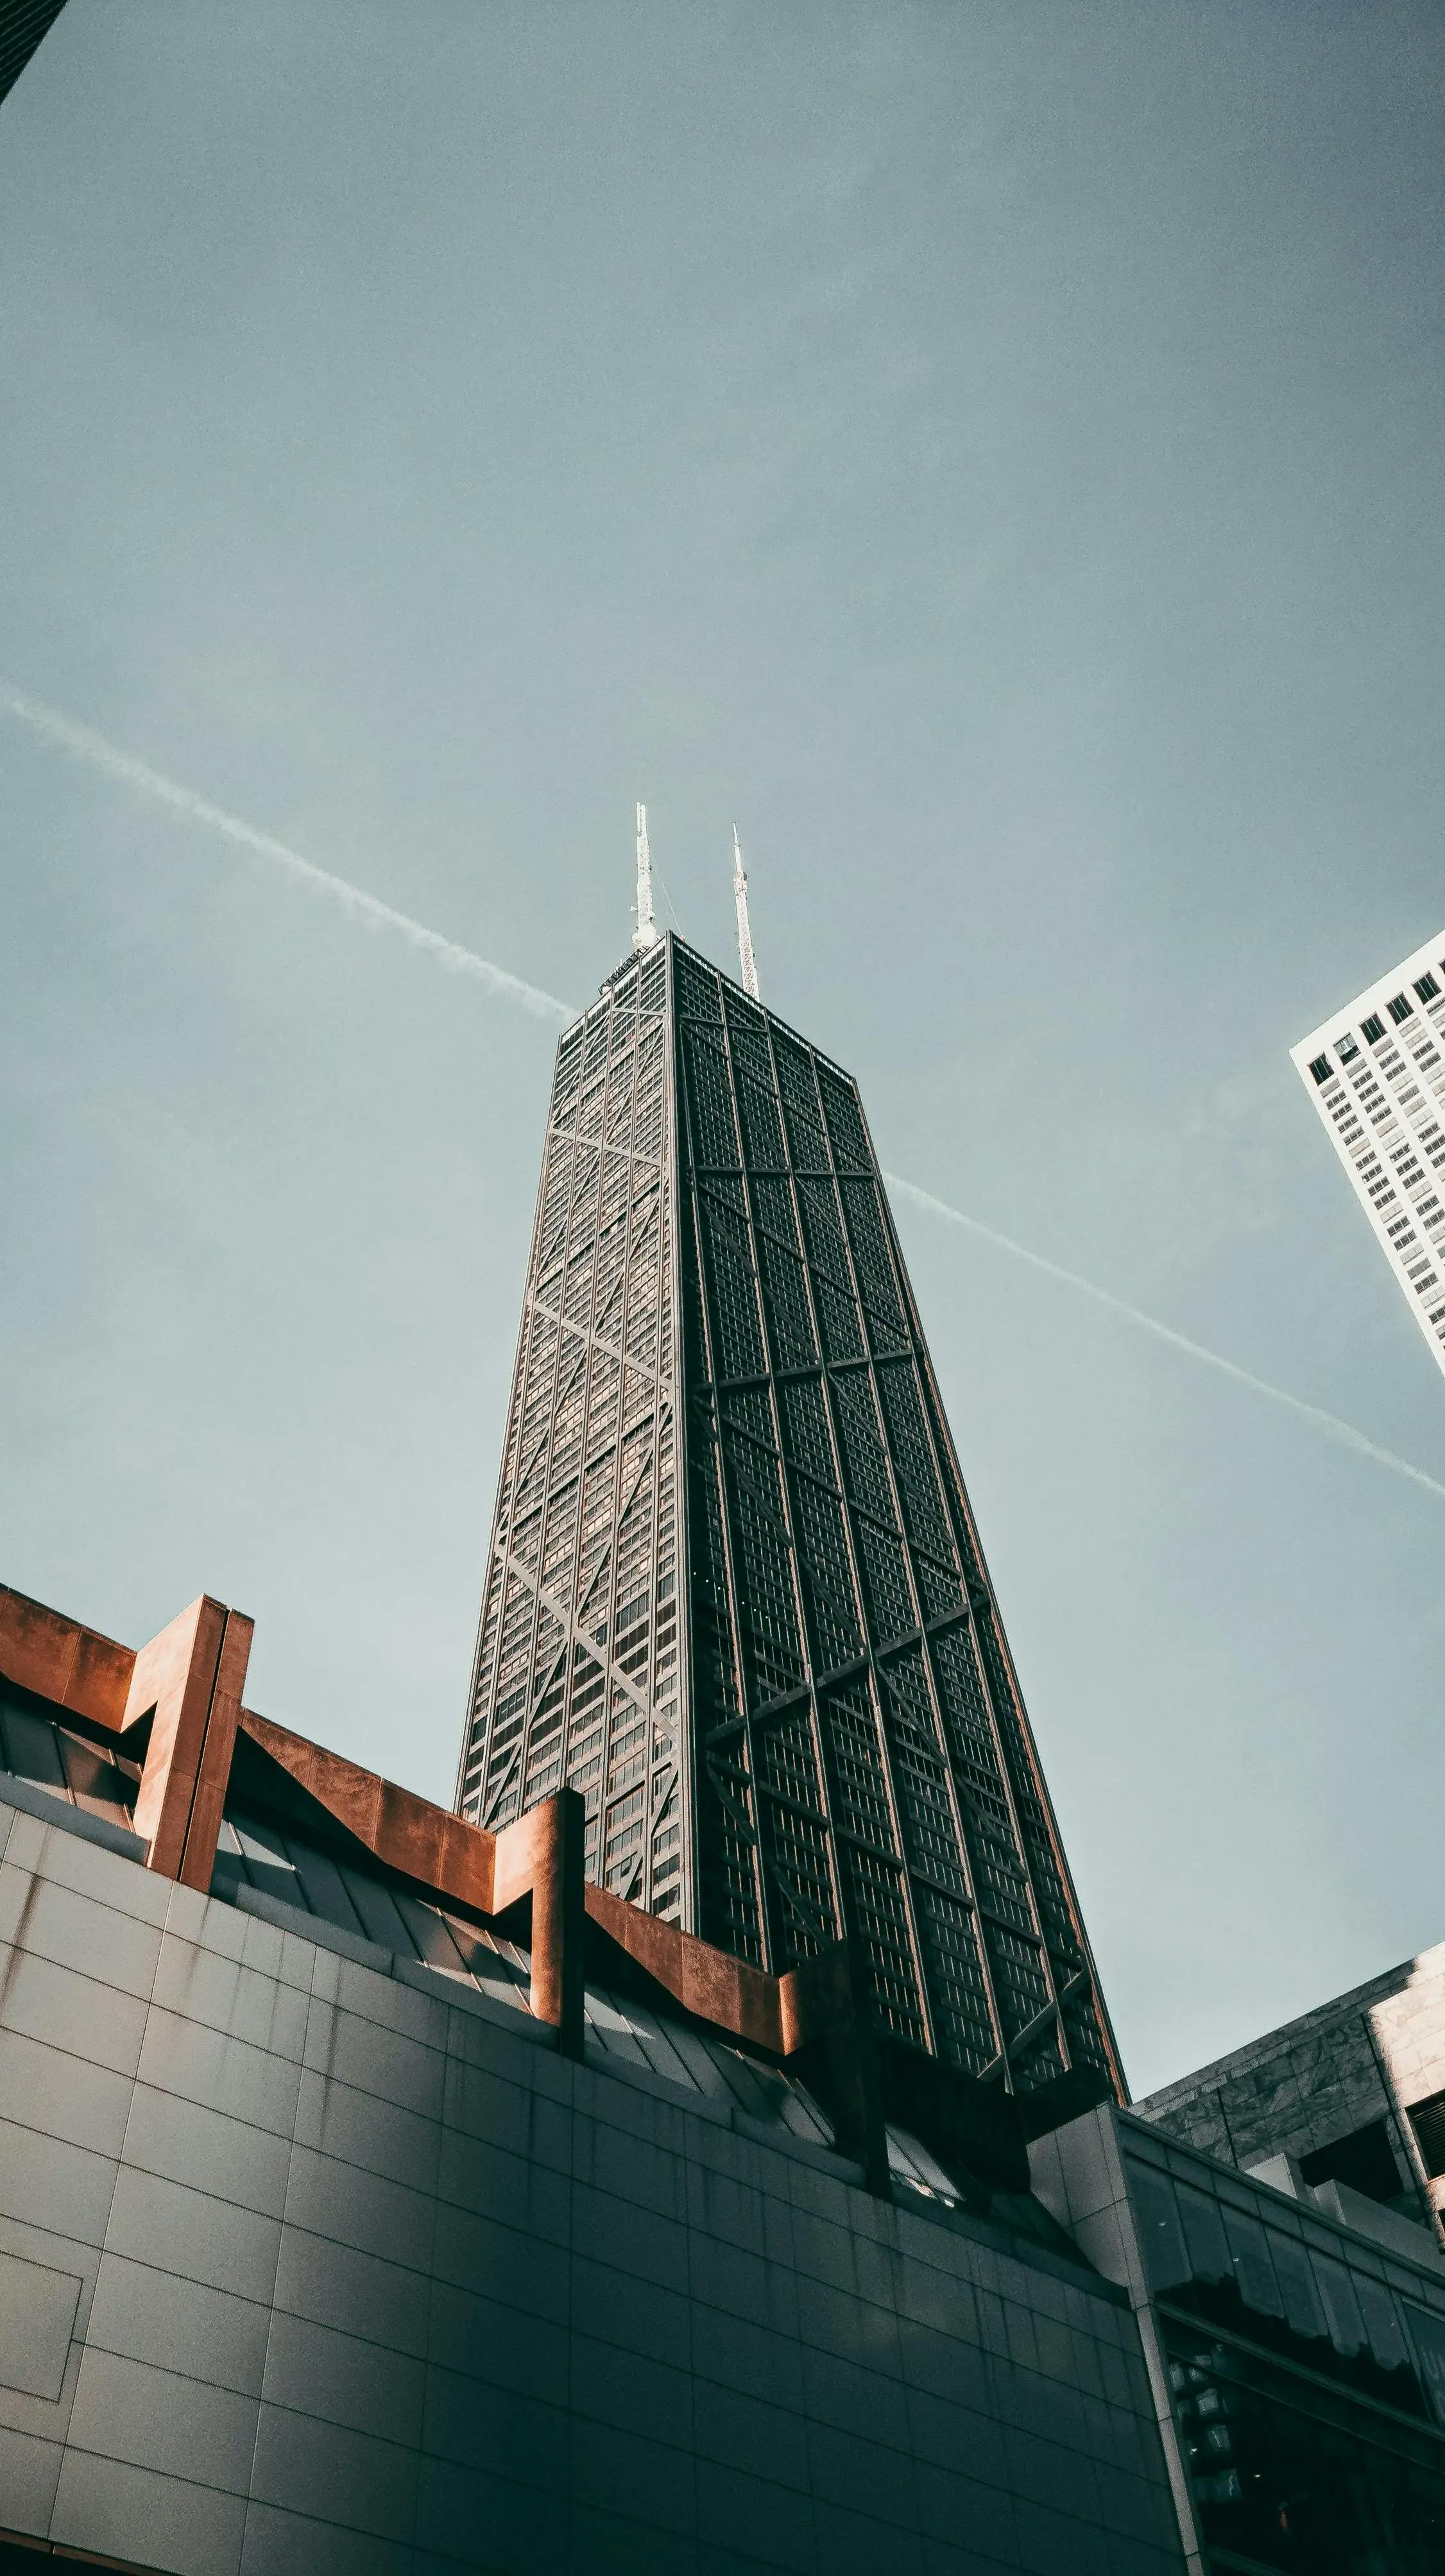 a photo of a skyscraper